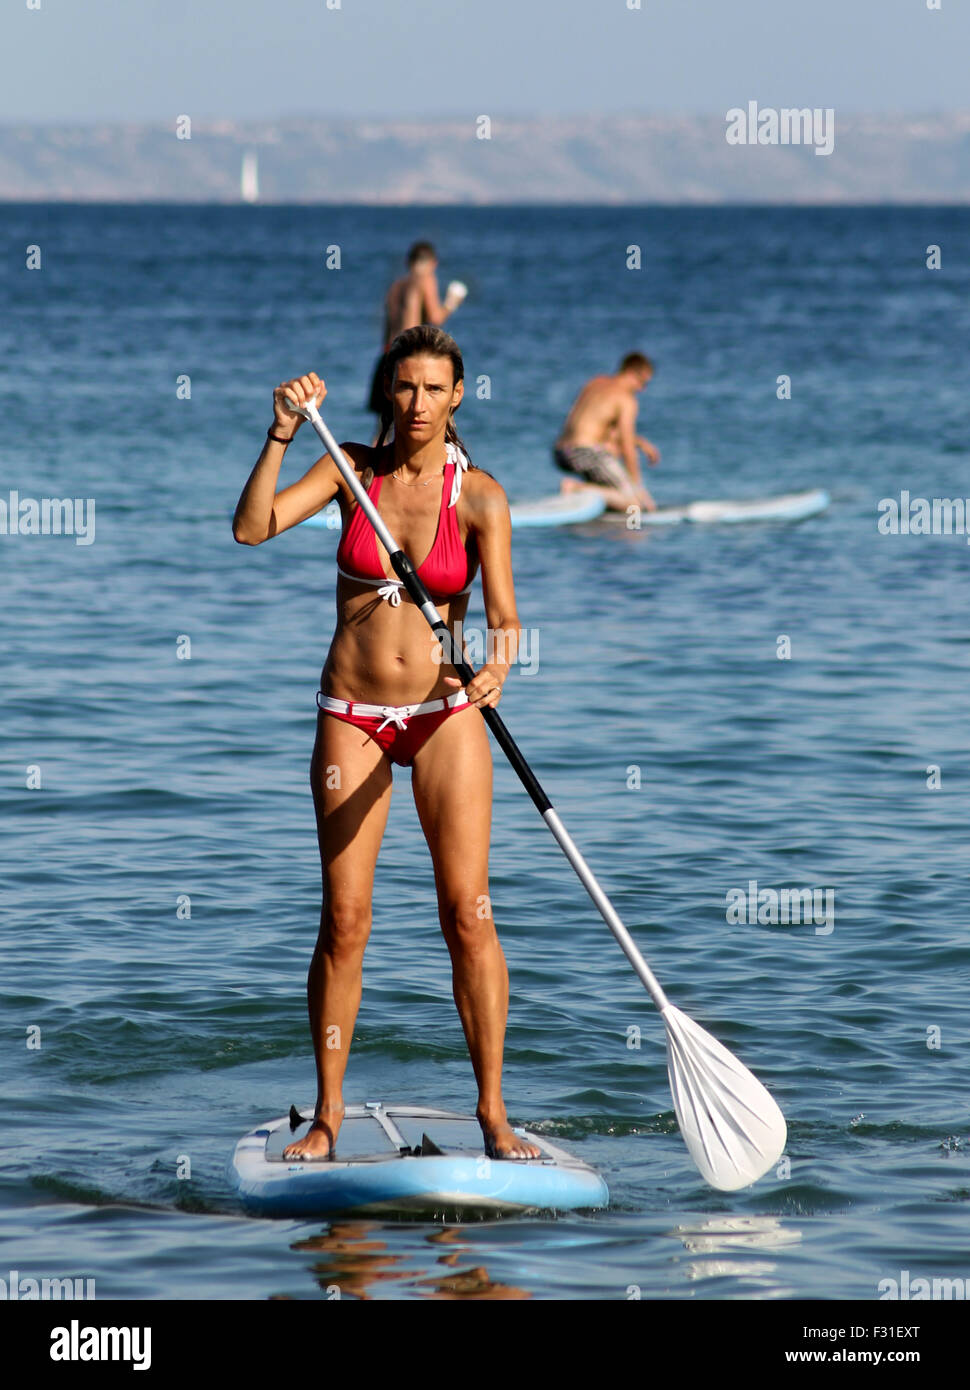 Strand von PALMA NOVA, Mallorca, Spanien 25. August 2015: Palma Nova Beach Resort auf 25. August 2015. Eine junge Frau ist Bo paddeln Stockfoto